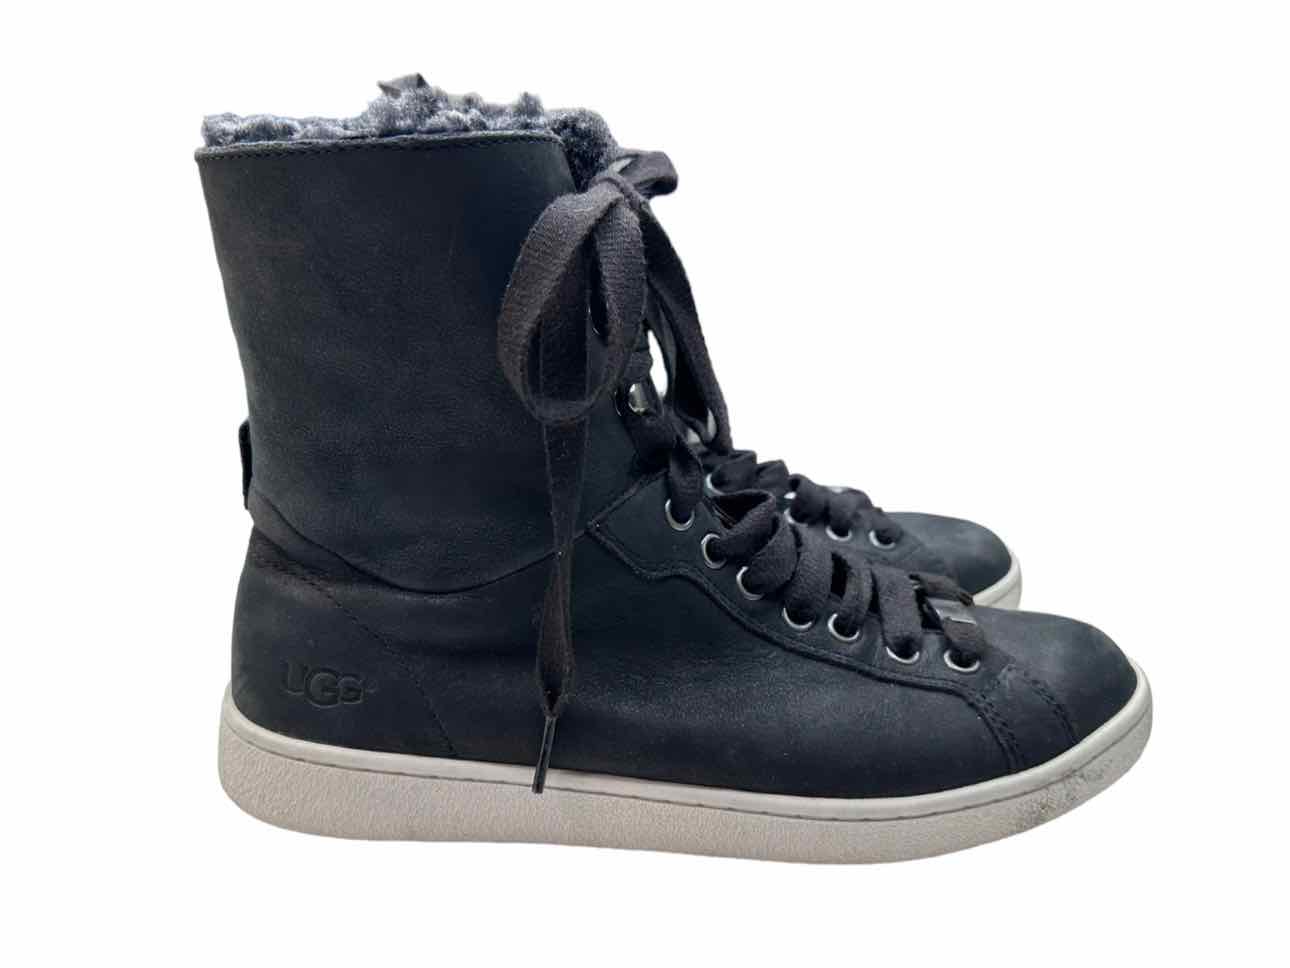 UGG Black Leather Toscana Croft High Top Sneaker Size 8